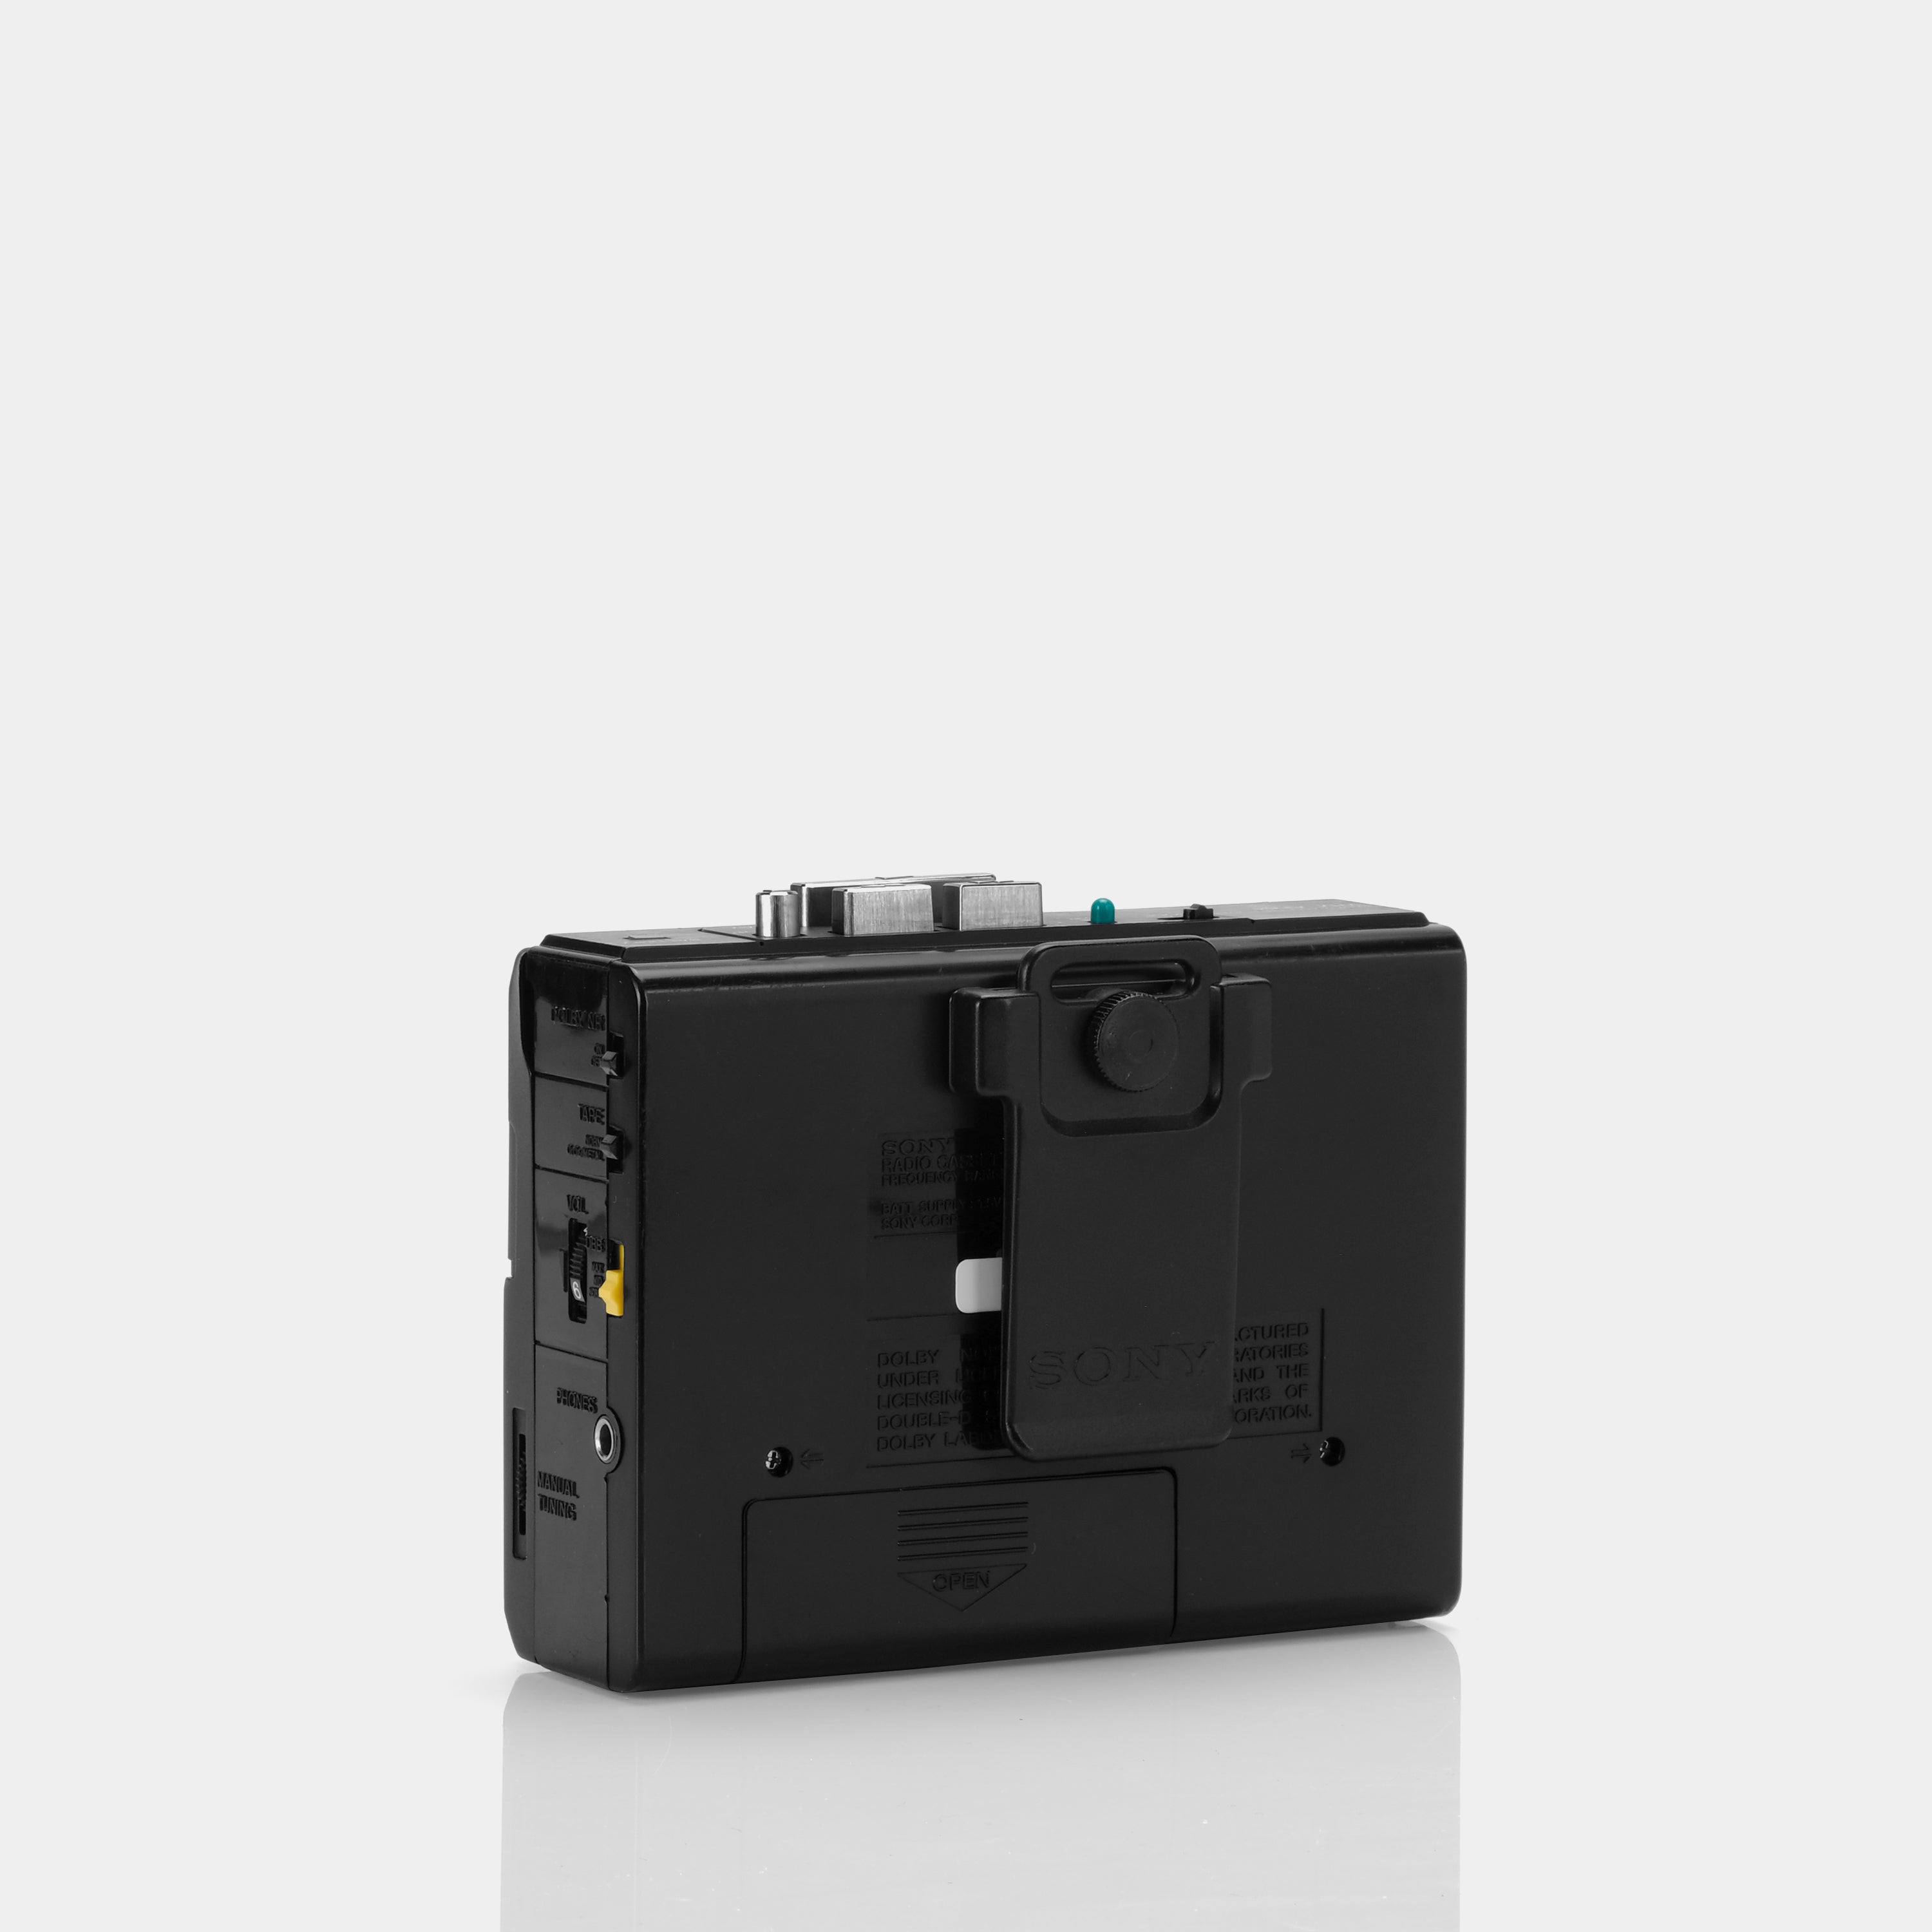 Sony Walkman WM-AF64 AM/FM Portable Cassette Player (B-Grade)